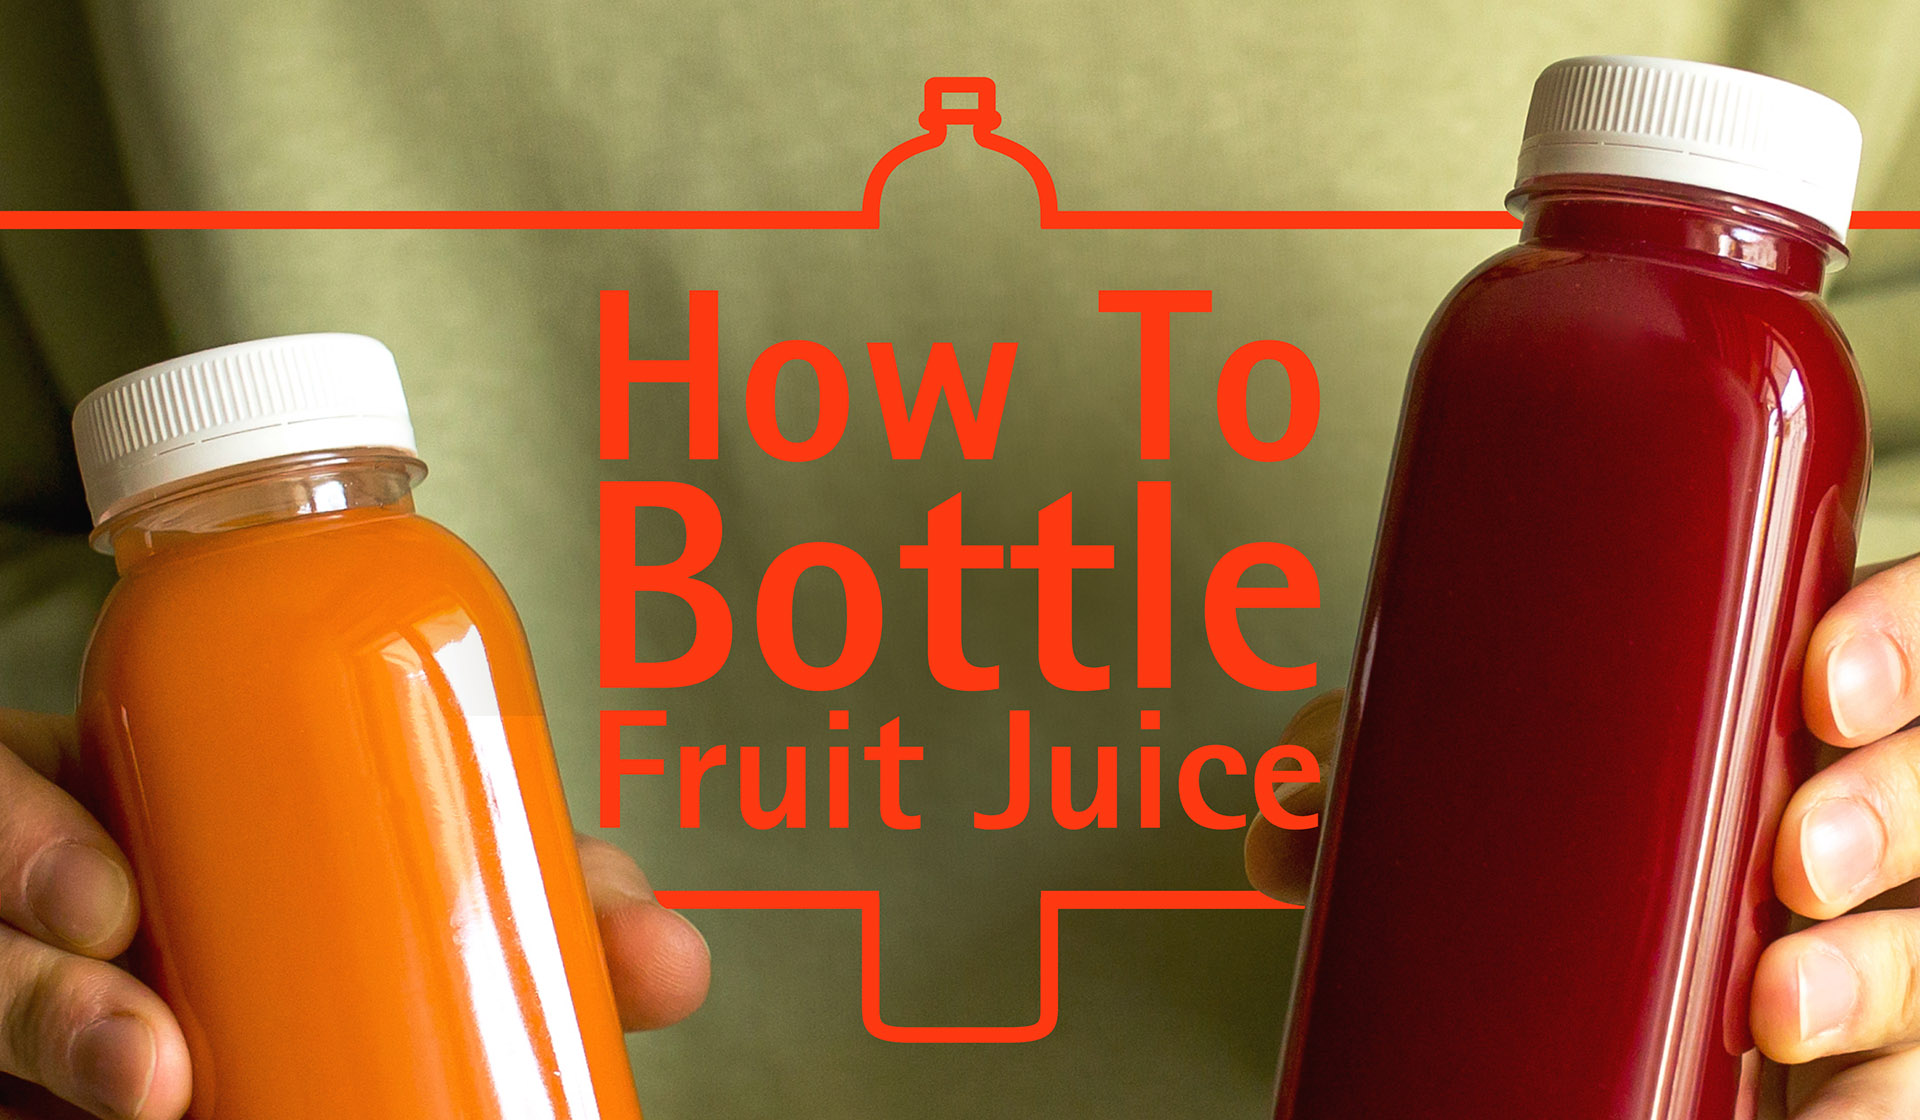 How To Bottle Fruit Juice: BottleStore.com’s In-Depth Guide